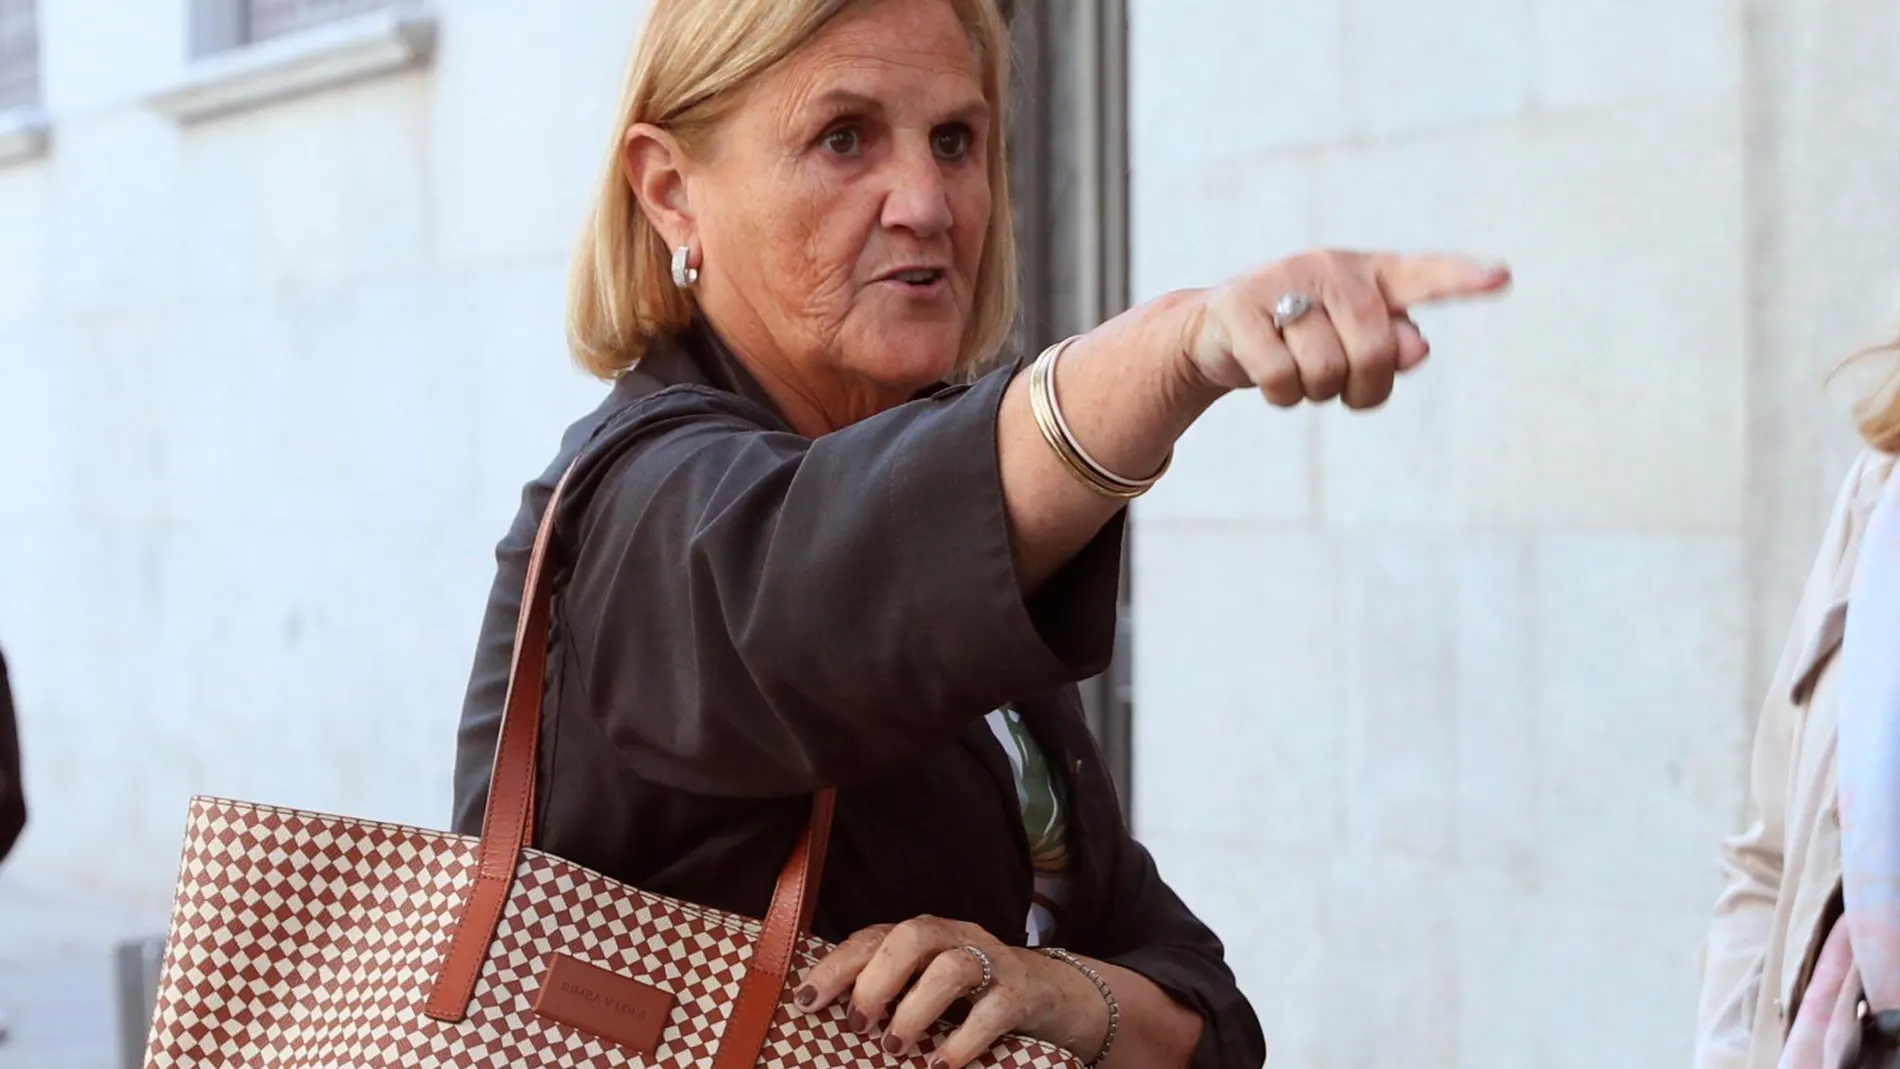 La expresidenta del Parlamento de Cataluña Núria de Gispert. EFE/J.J. Guillén